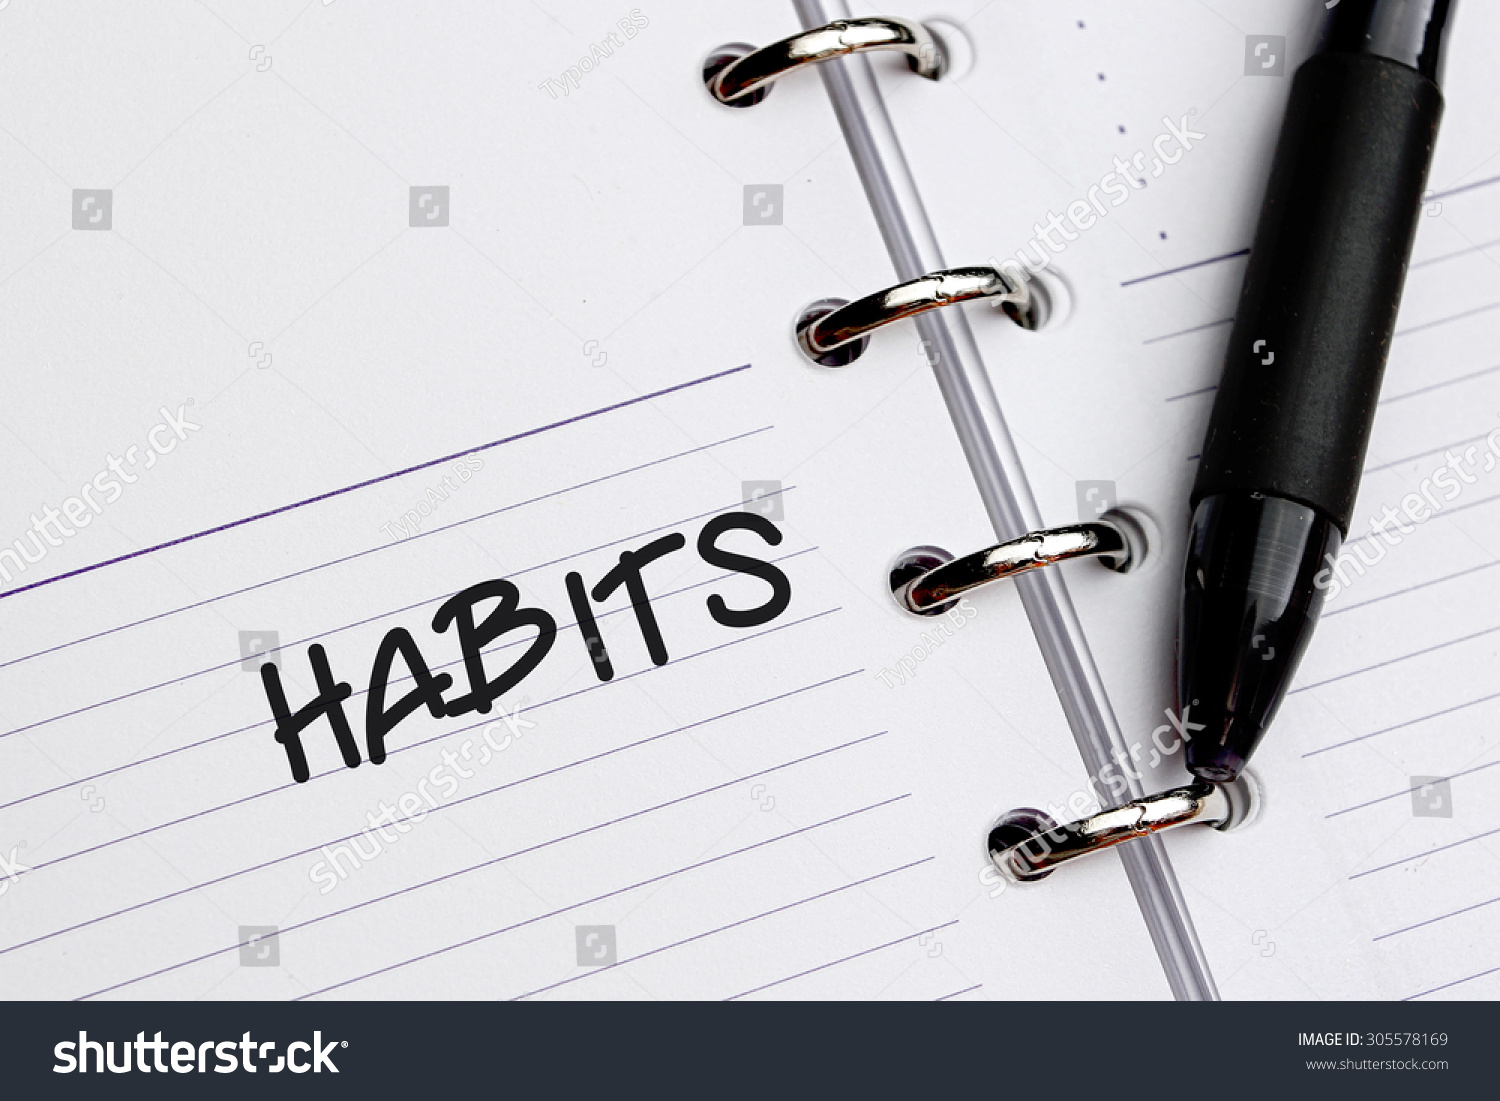 Habits Word Written On Notebook Stock Photo 305578169 : Shutterstock